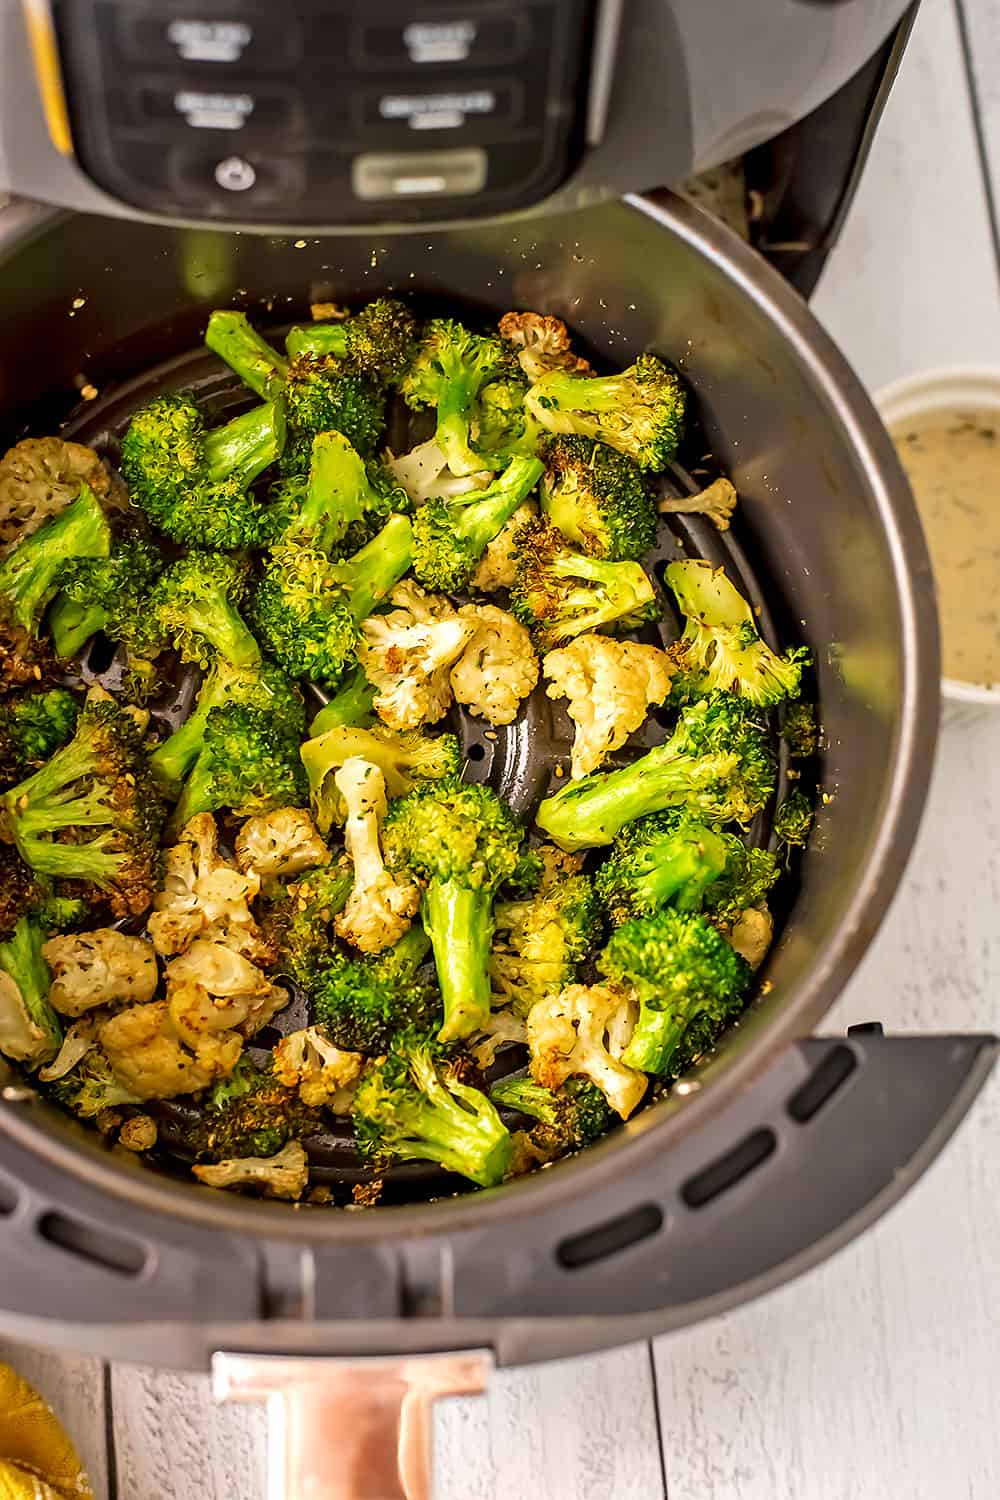 Air Fryer Broccoli – The Travel Bite